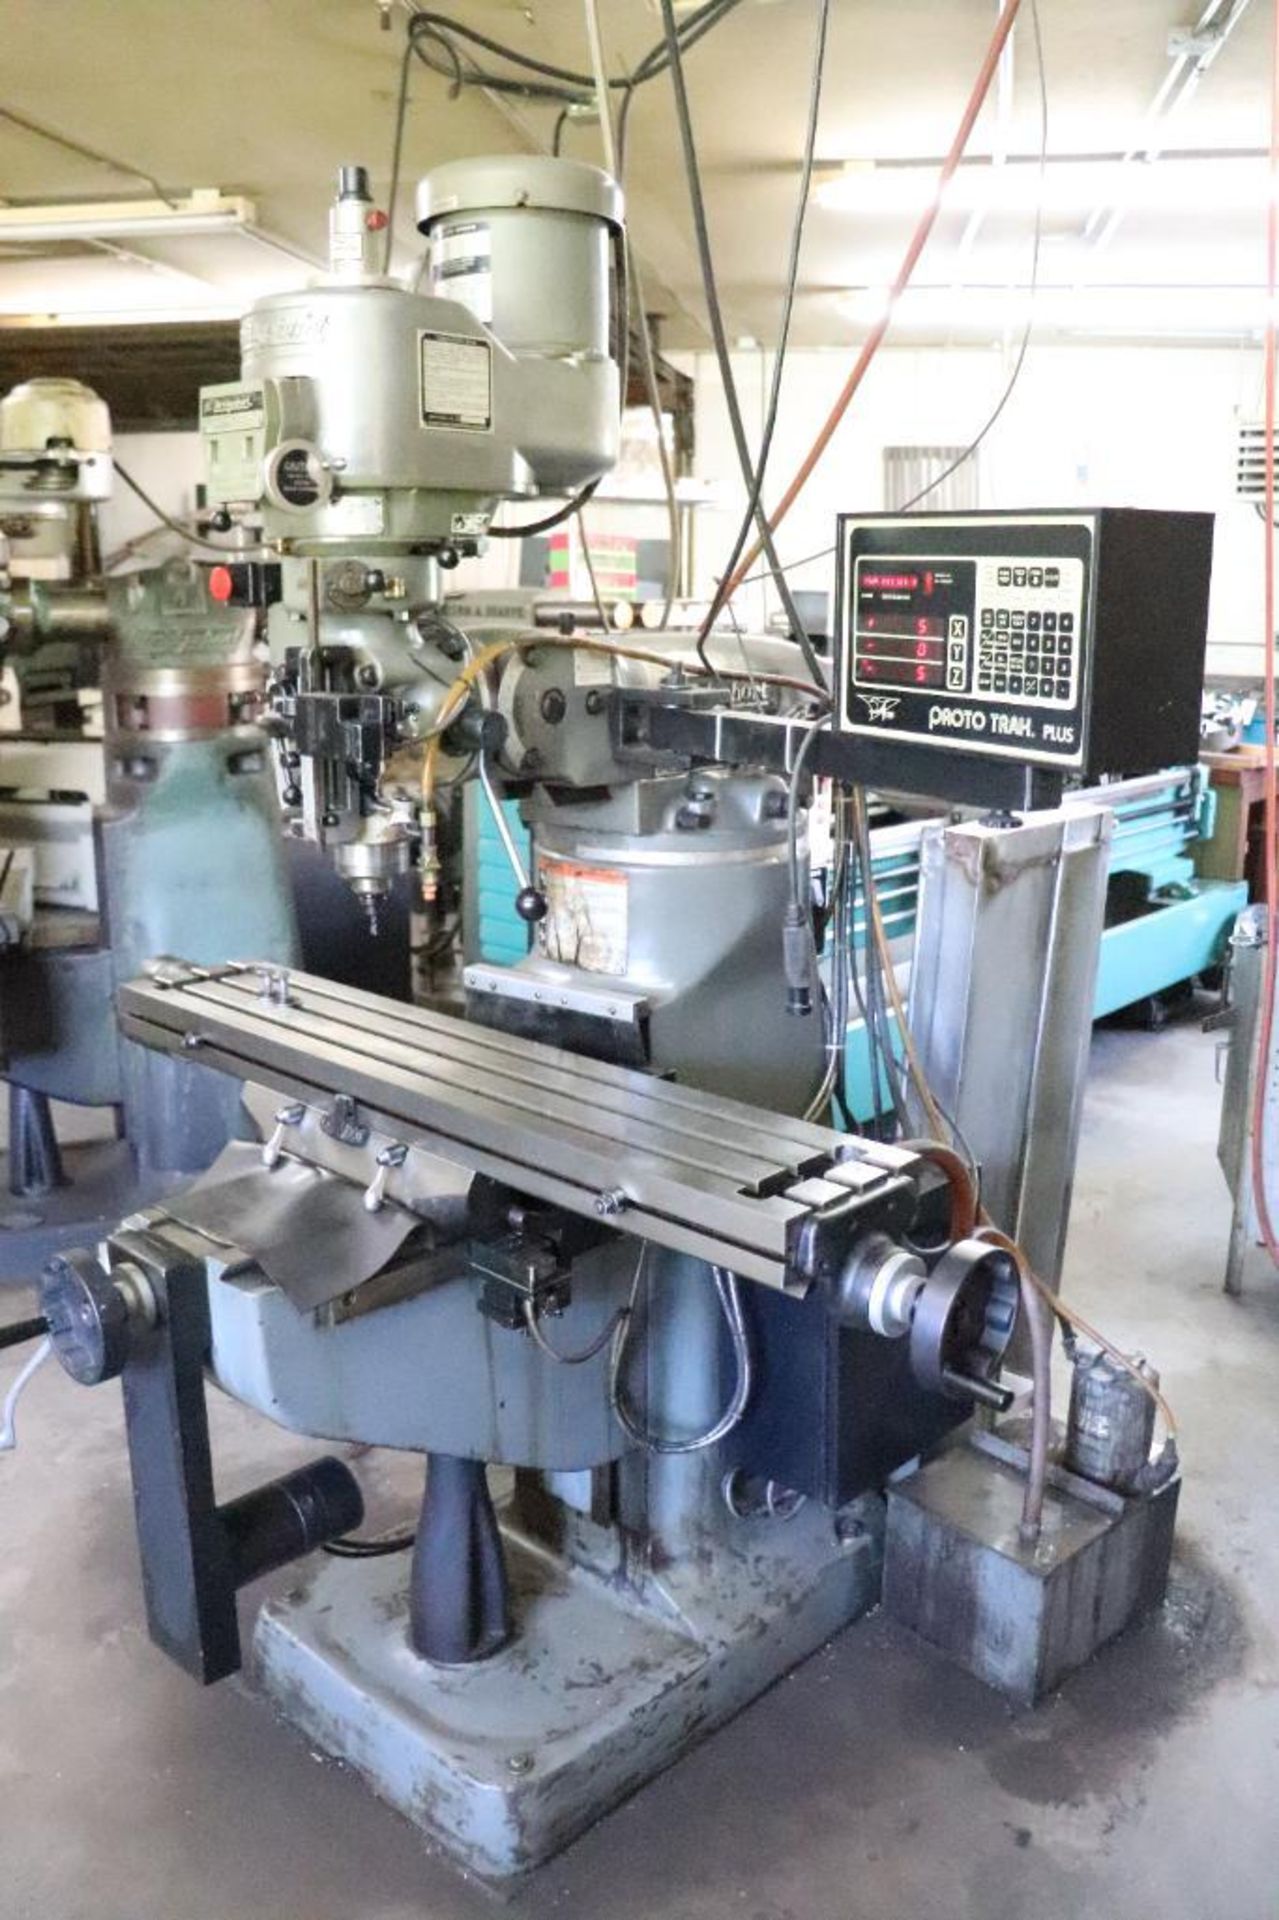 Bridgeport vertical milling machine w/ 2 axis CNC Proto Trak Plus